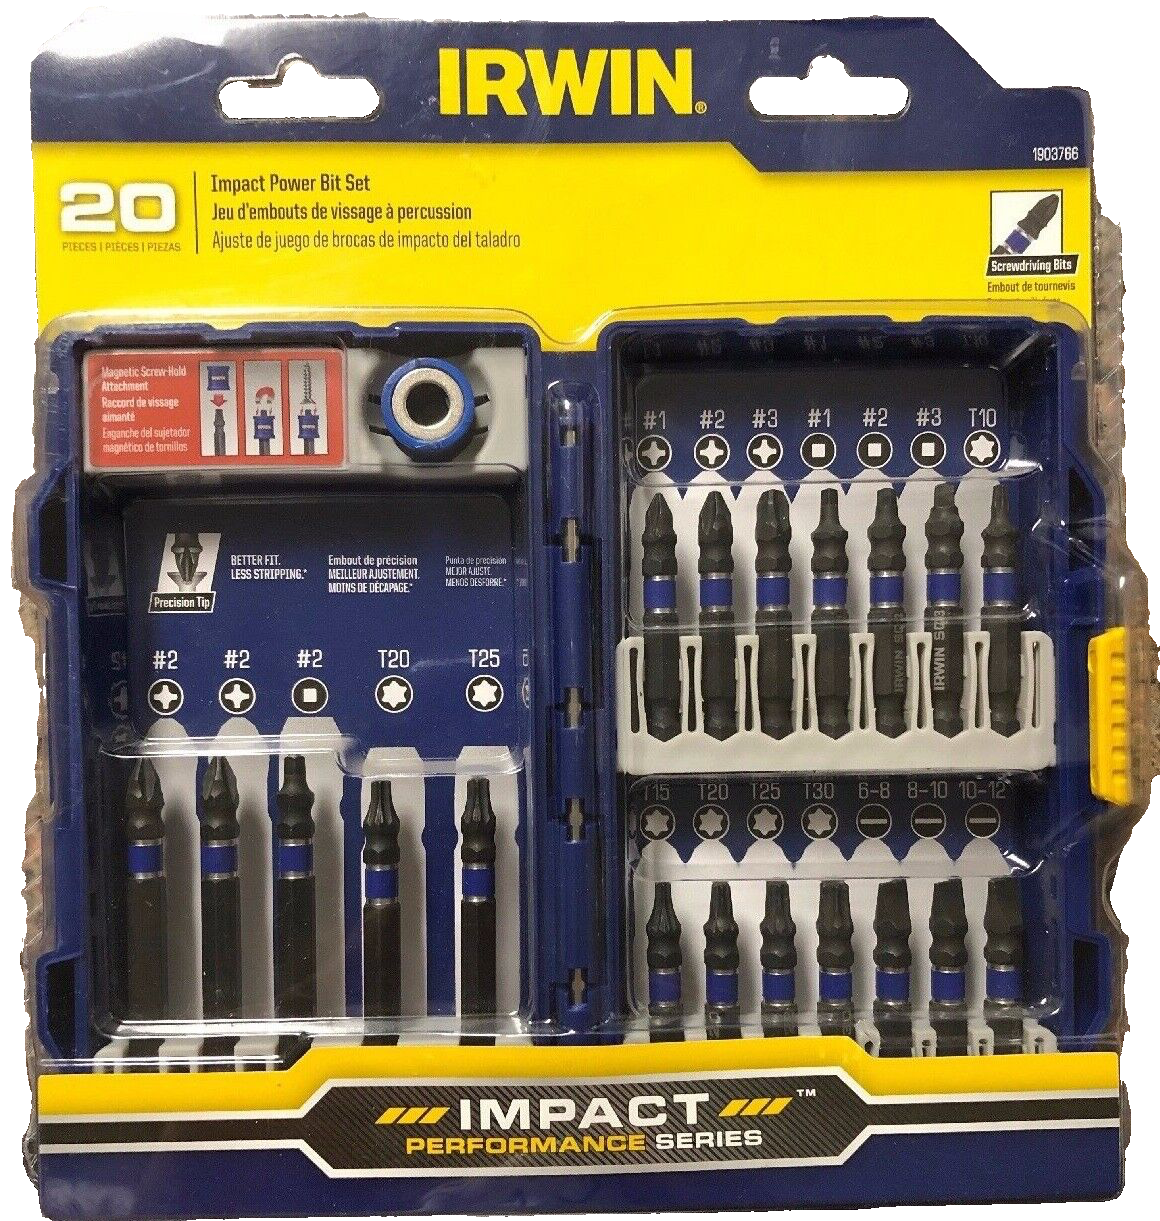 IMPACT Bit Set Performance Bits IRWIN Tools New 20 pieces w/Storage Case - $21.77